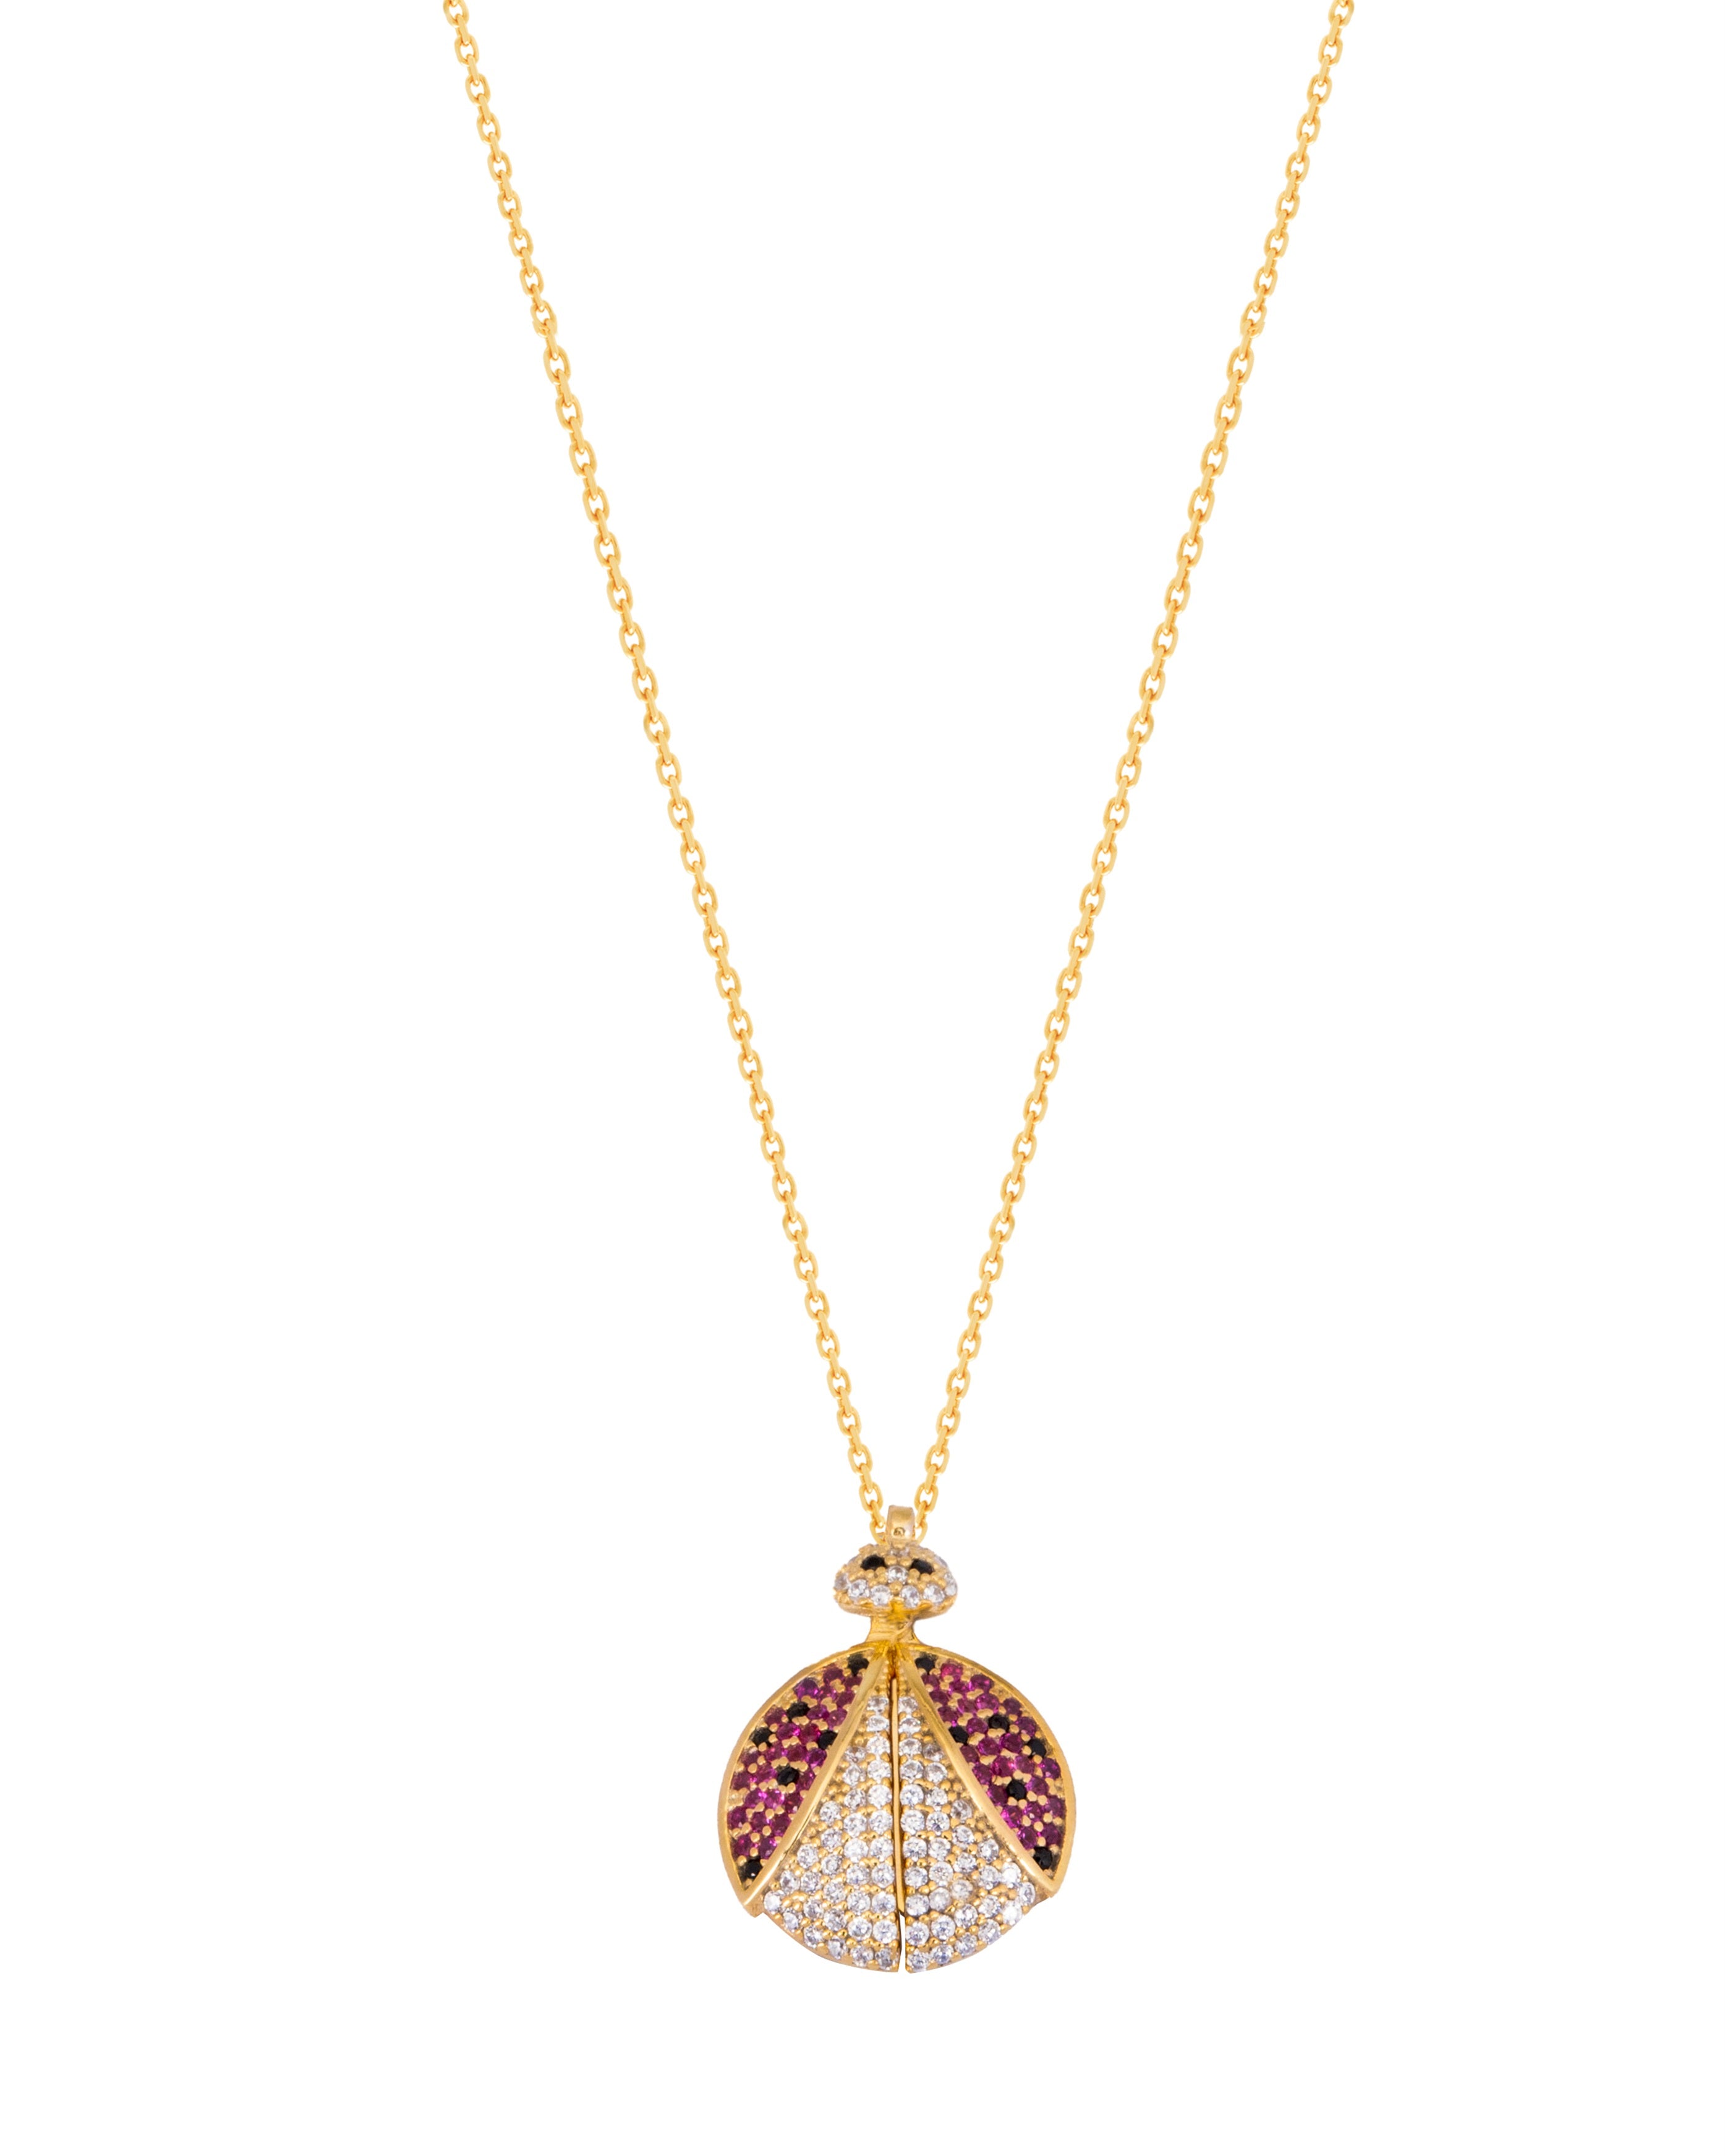 Necklace Long Necklace Pendant Weaving Ladybug Seed Bead Gold